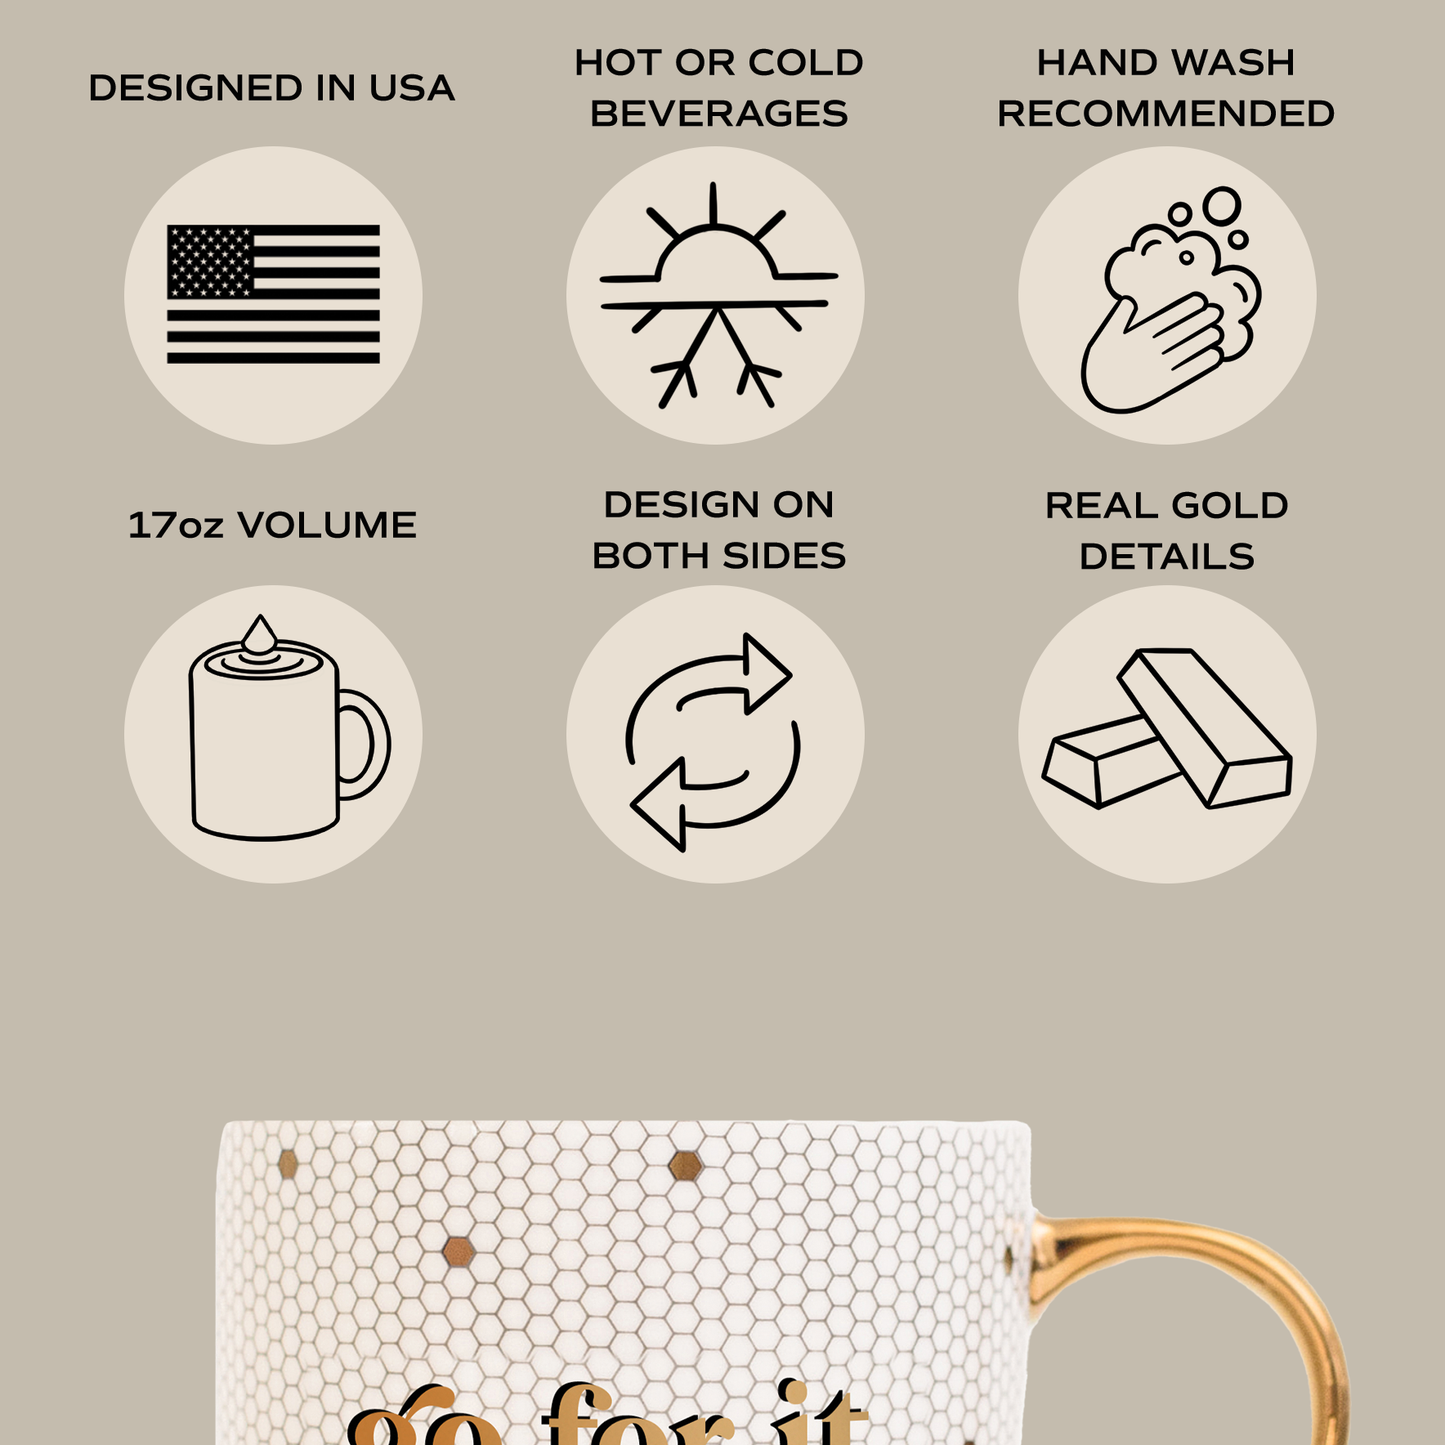 You Got This Gold Tile Coffee Mug - Home Decor & Gifts